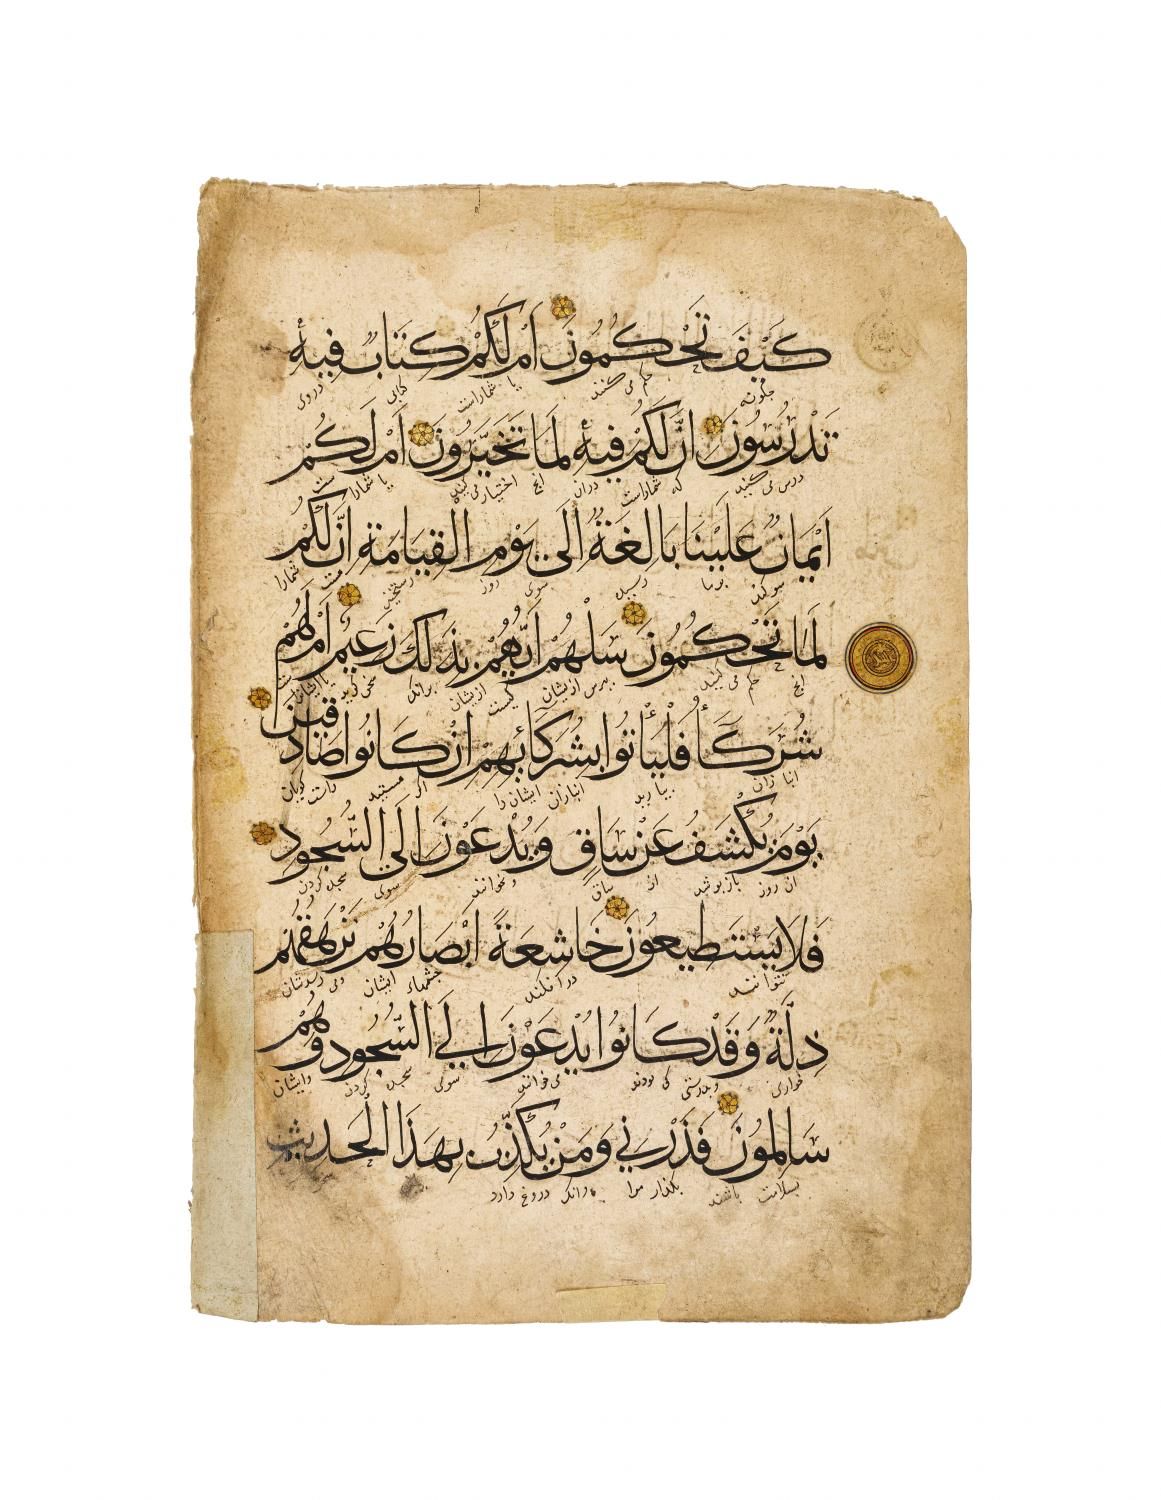 AN ILKHANID QURAN LEAF, IRAN 14TH CENTURY 伊勒哈尼德《古兰经》叶片，伊朗，14 世纪
 
 长 x 宽：47 x 32&hellip;